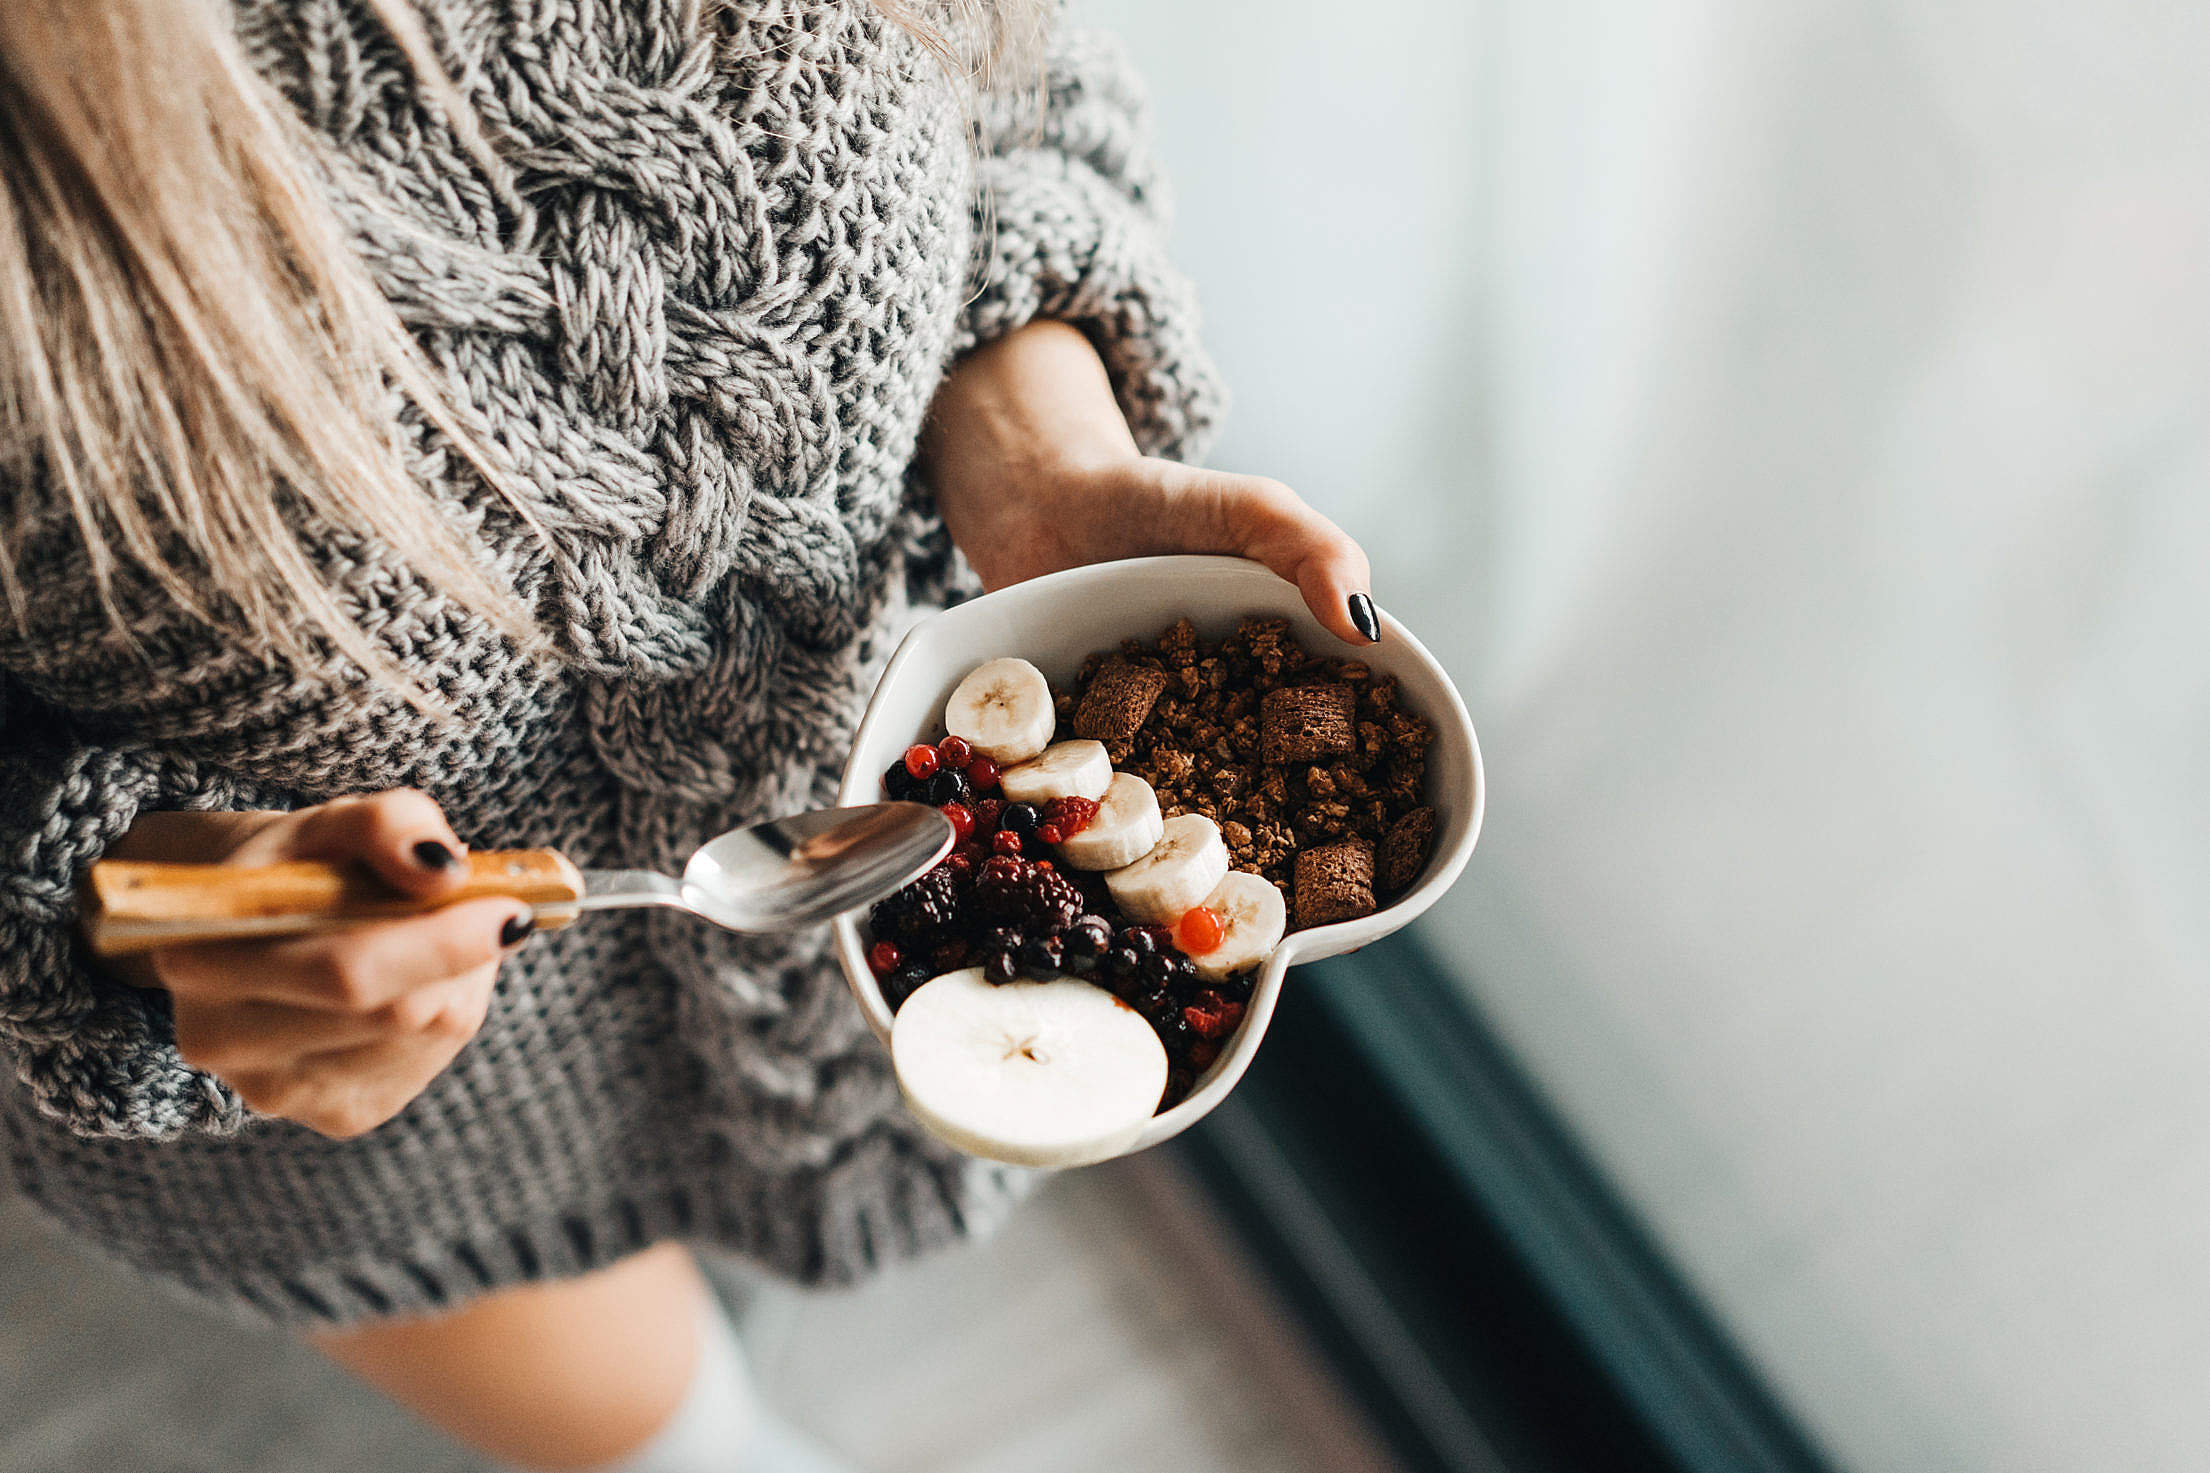 Woman in Knitted Sweater Enjoying Morning Breakfast Free Stock Photo